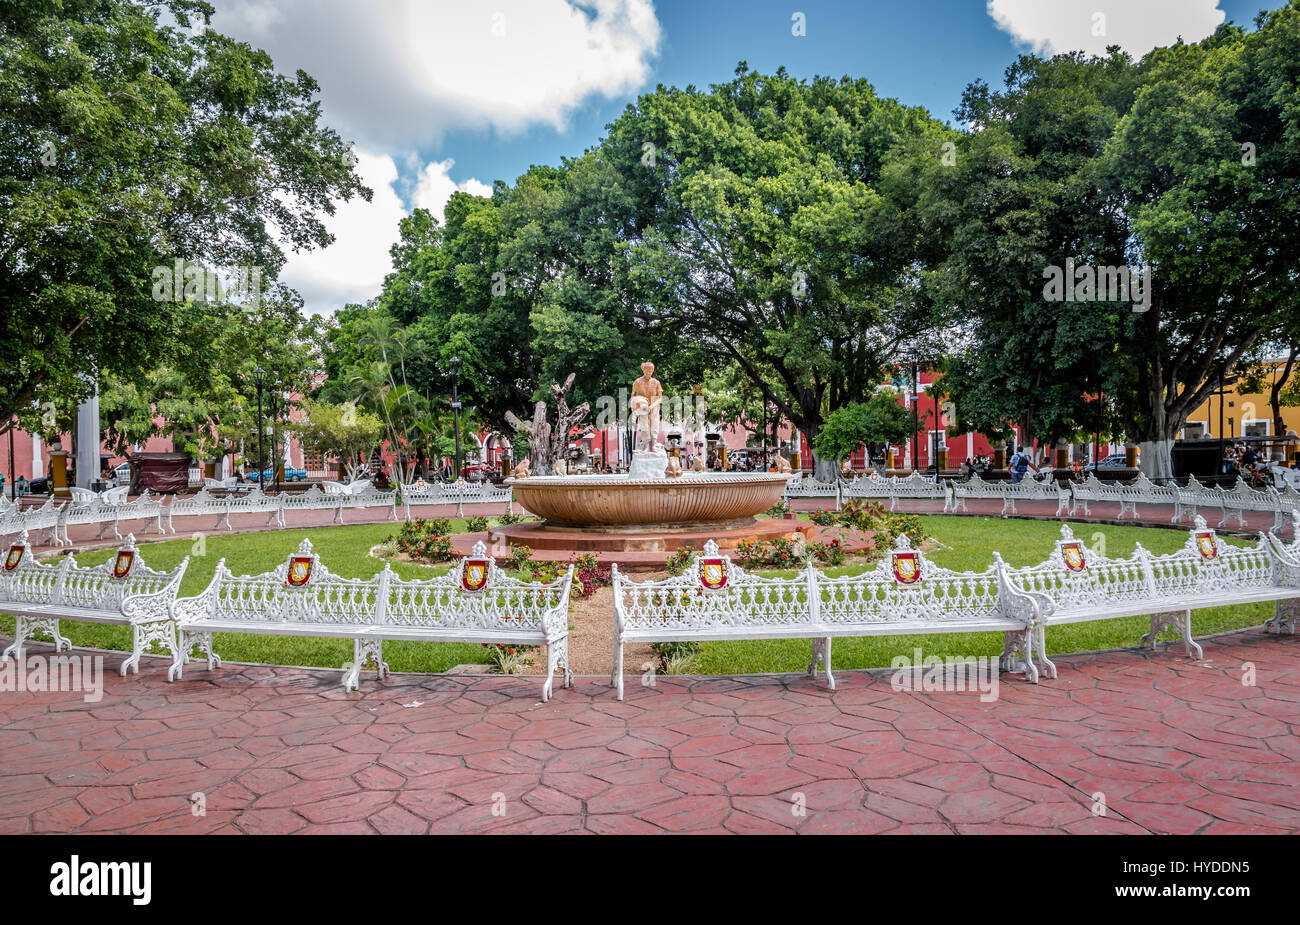 Fountain and main plaza - Valladolid, Mexico Stock Photo